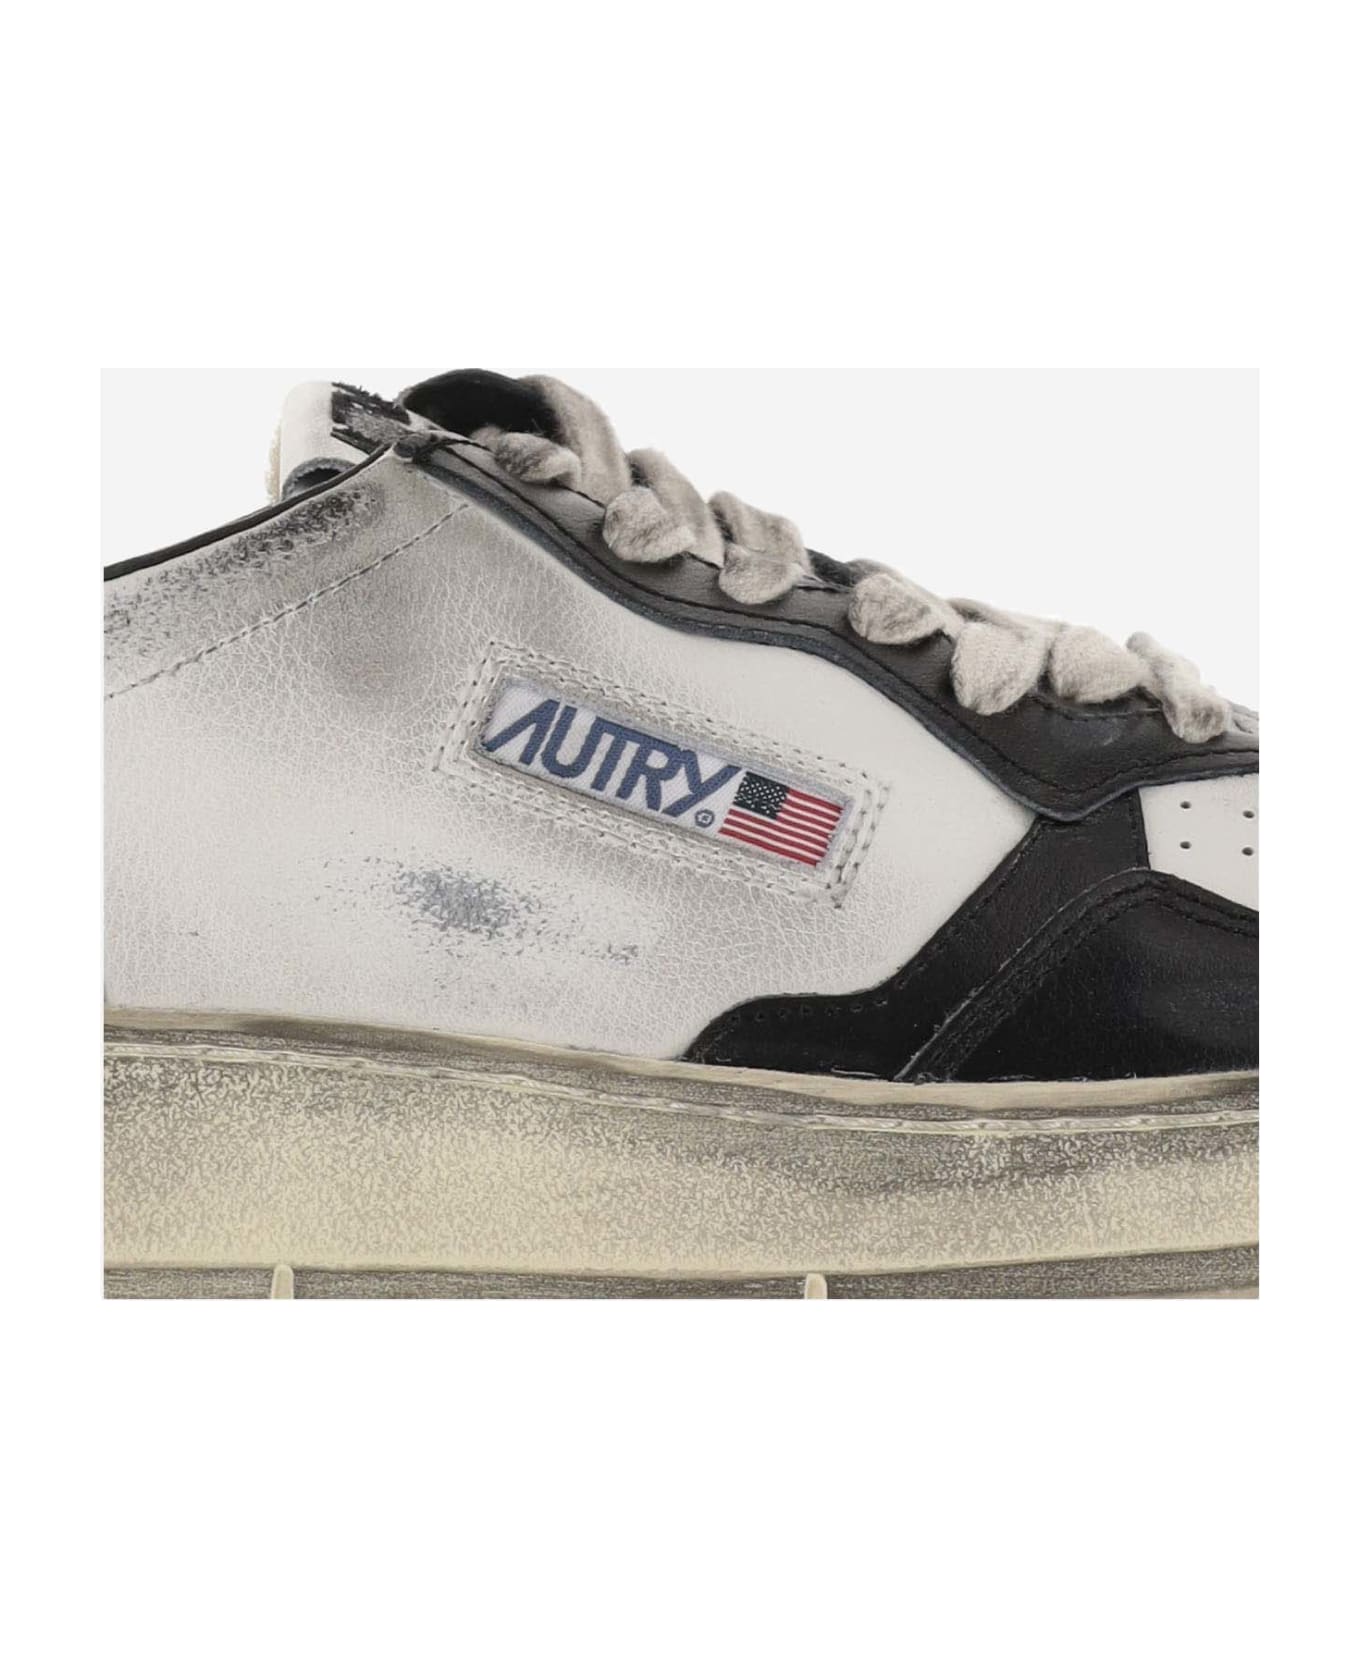 Autry Super Vintage Sneakers - White Black Platino スニーカー